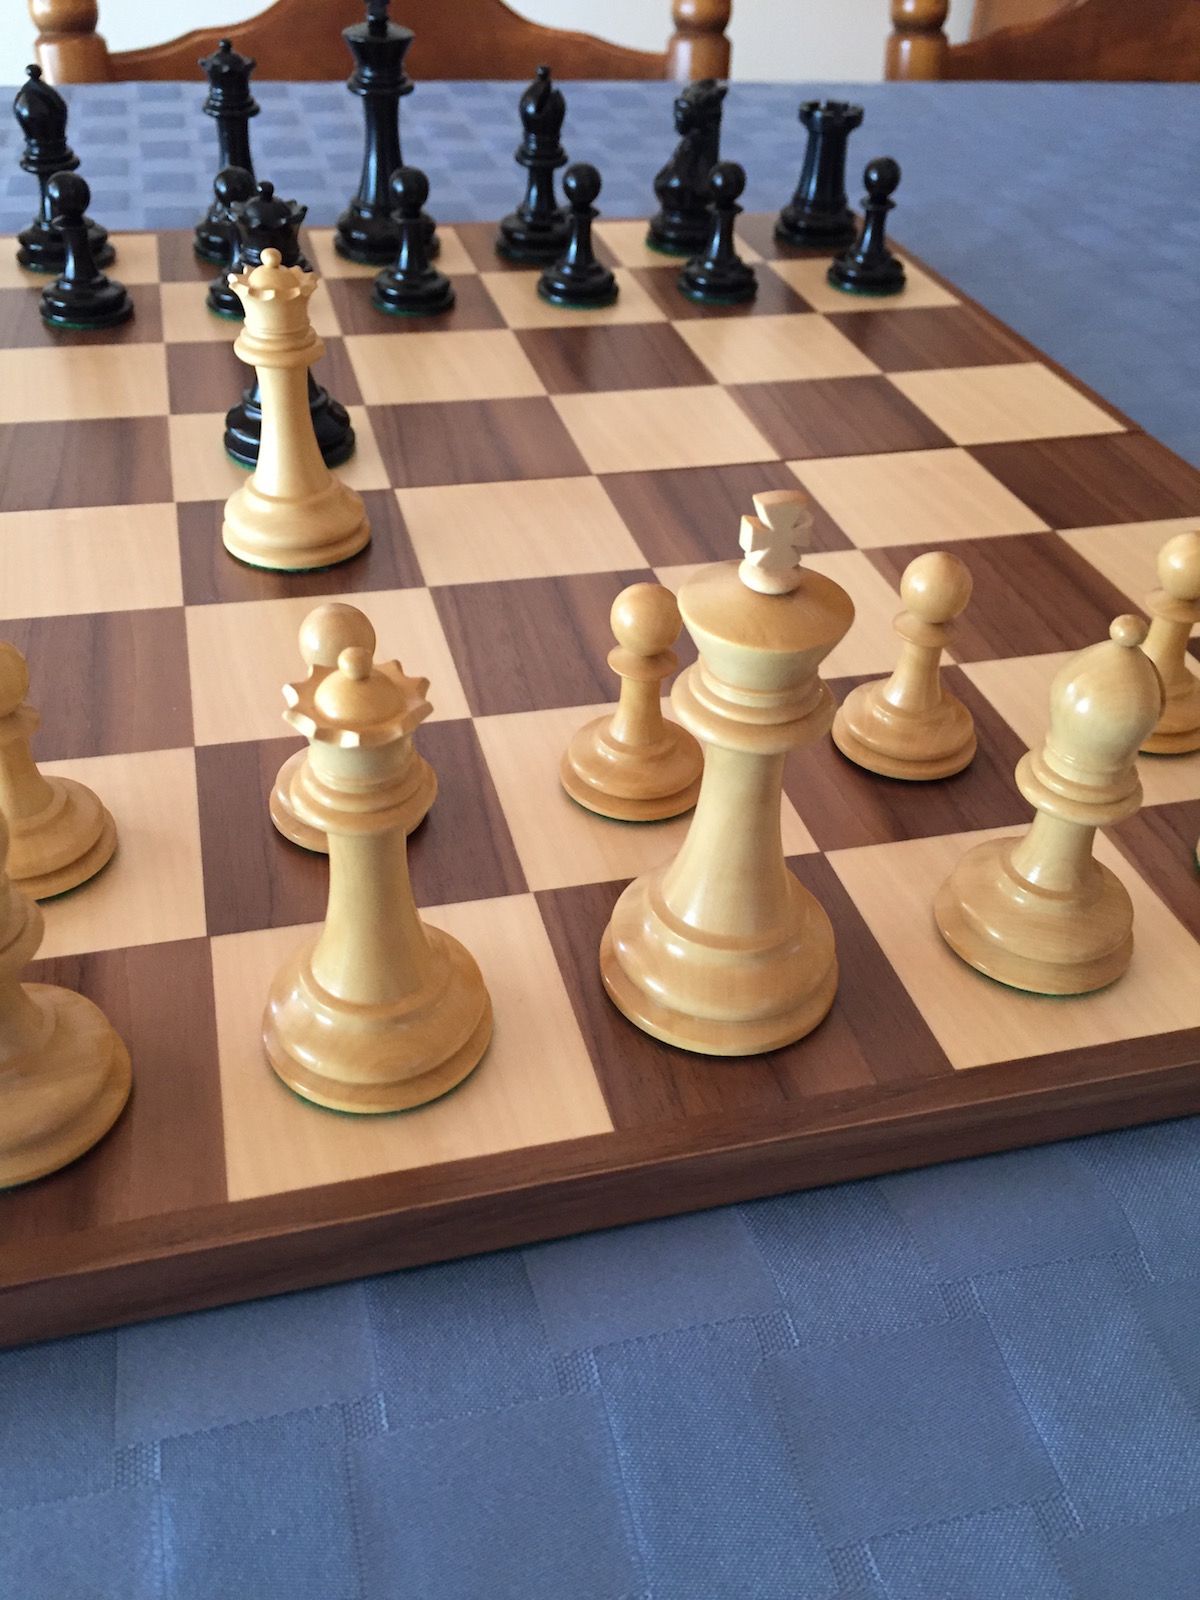 Ajedrez, Partidas Clasicas / Chess Classic Games: De Paul Morphy a